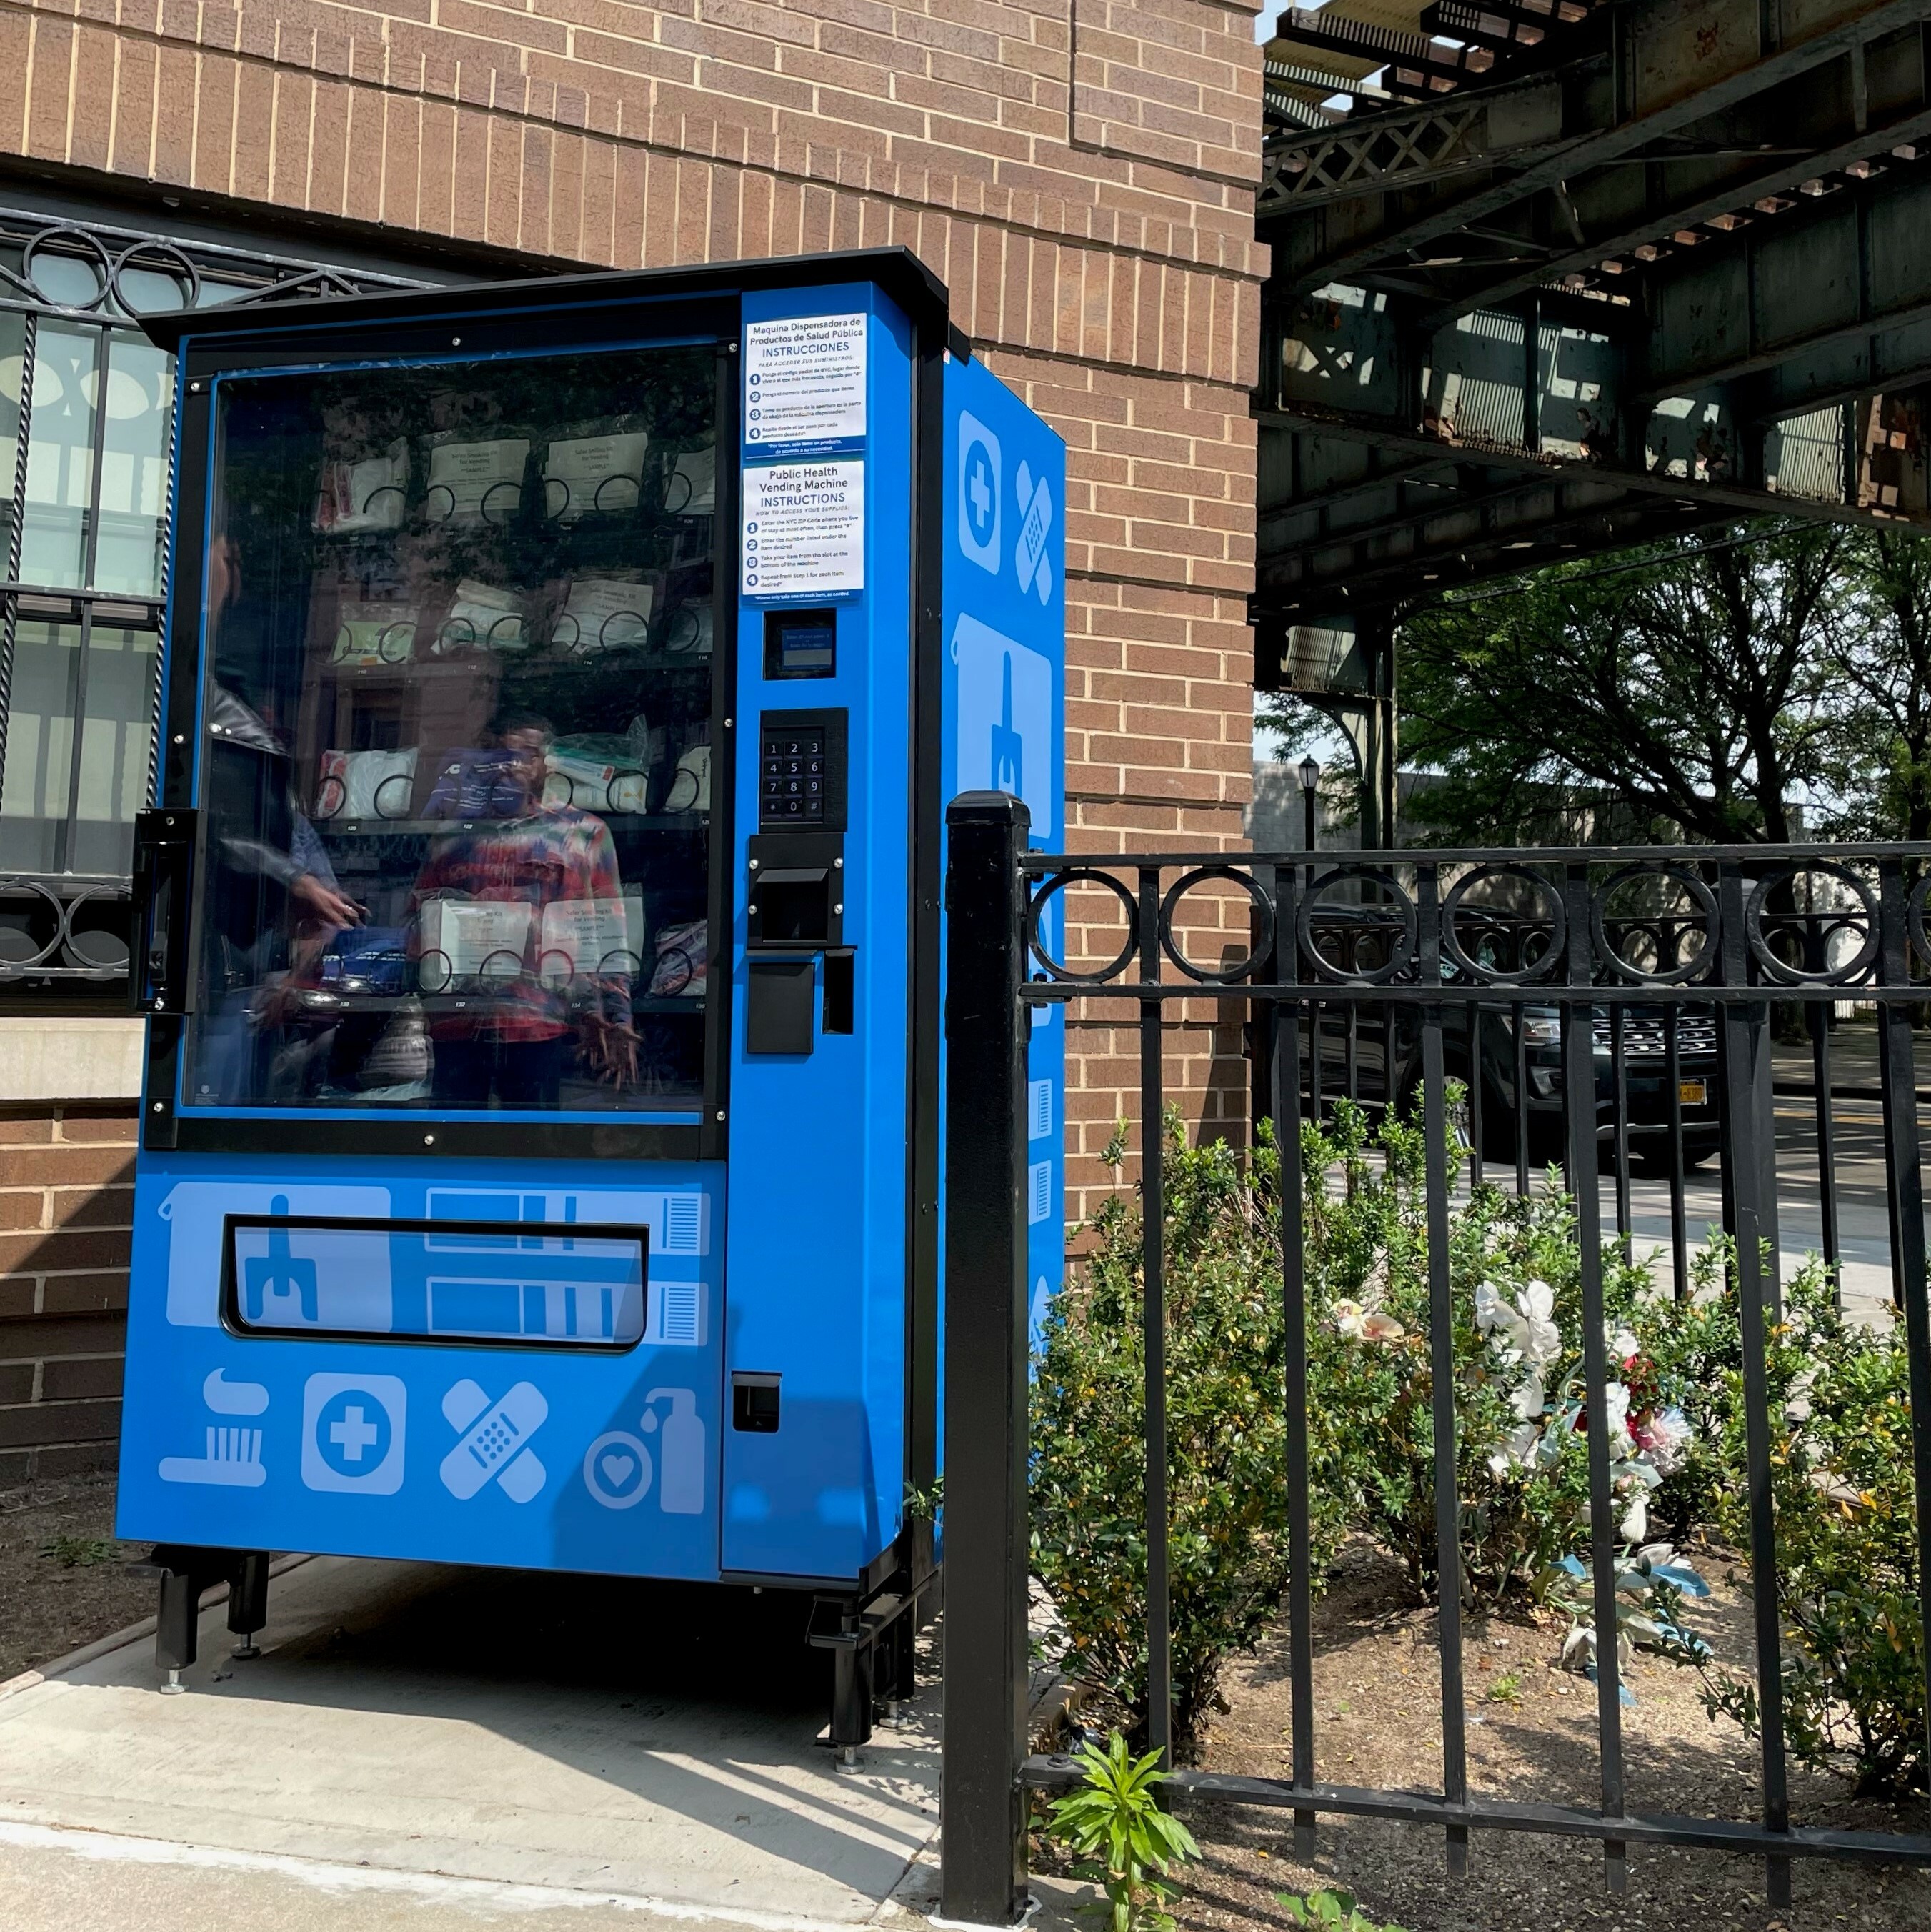 New York City just got its first ‘public health’ vending machine